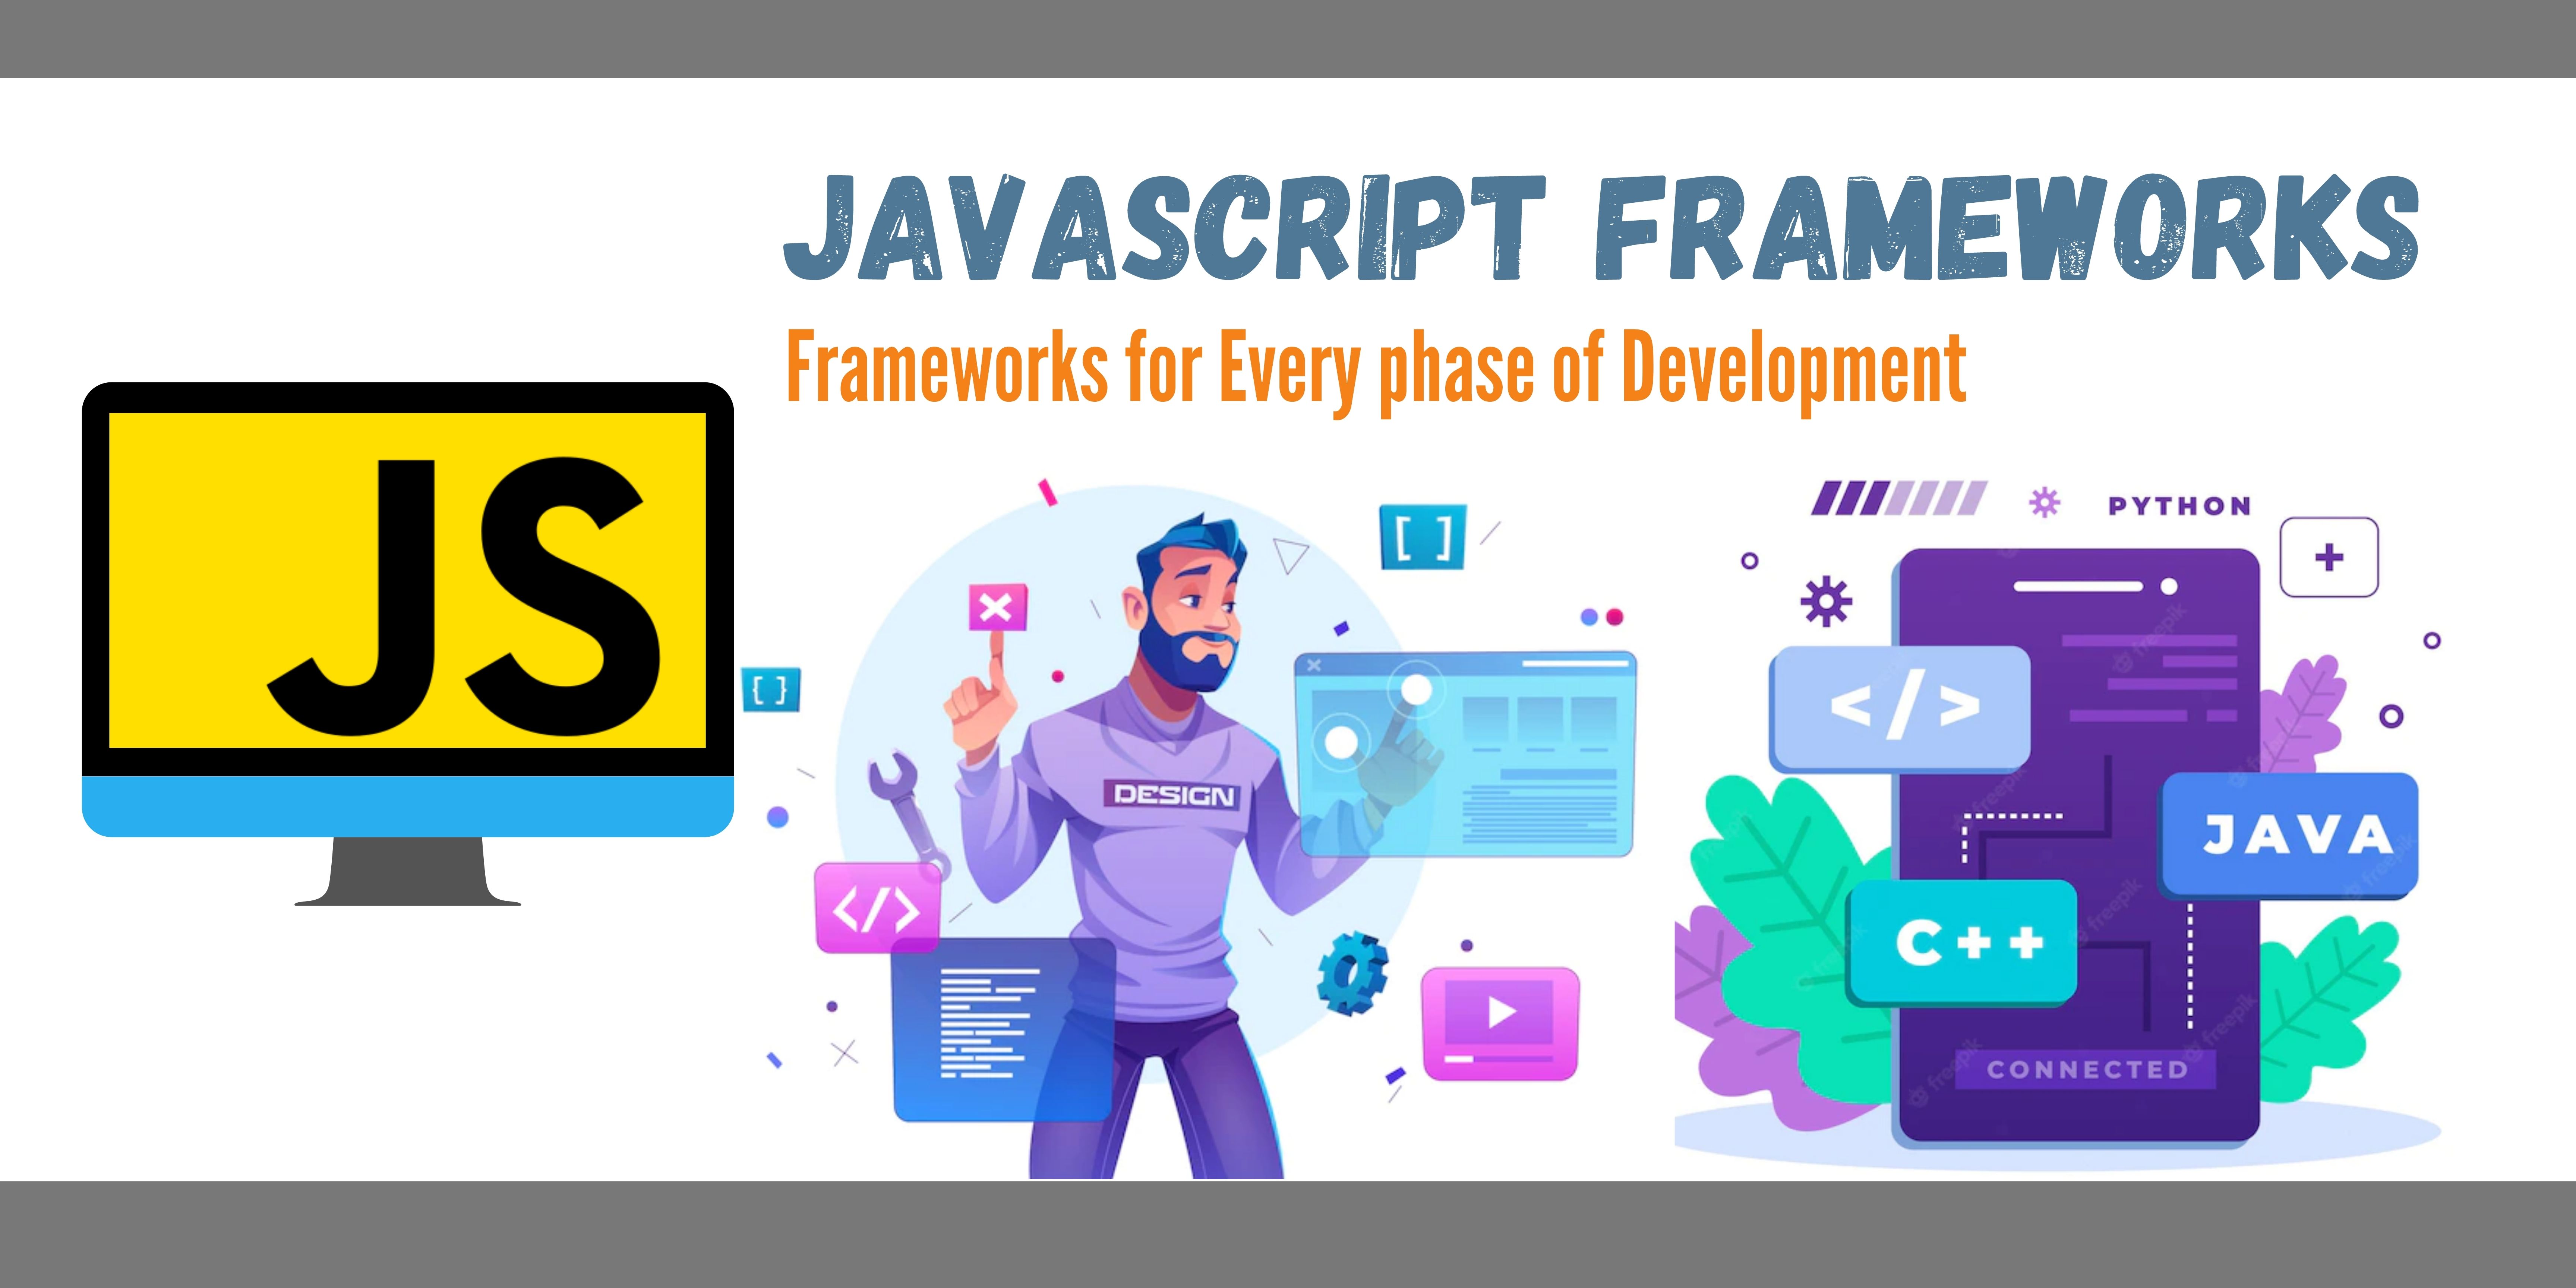 JavaScript Frameworks for Every phase of Development